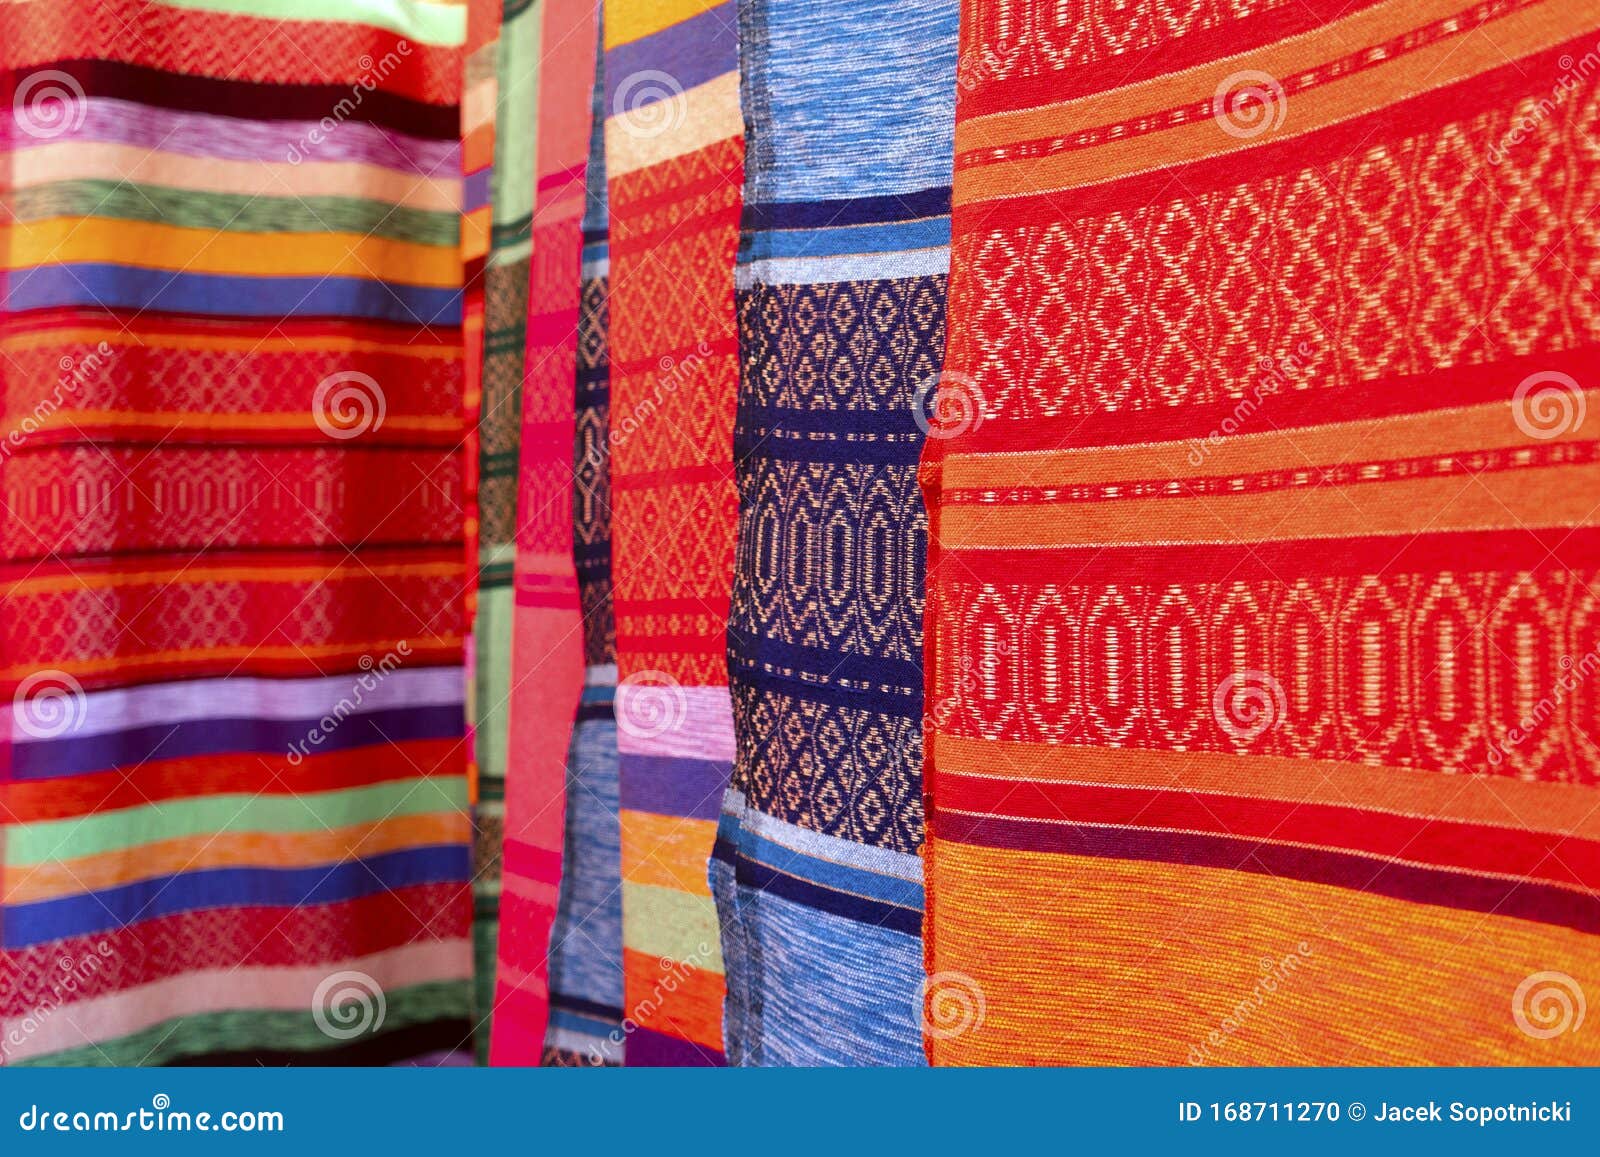 traditional berber carpets in marrakech, morroco